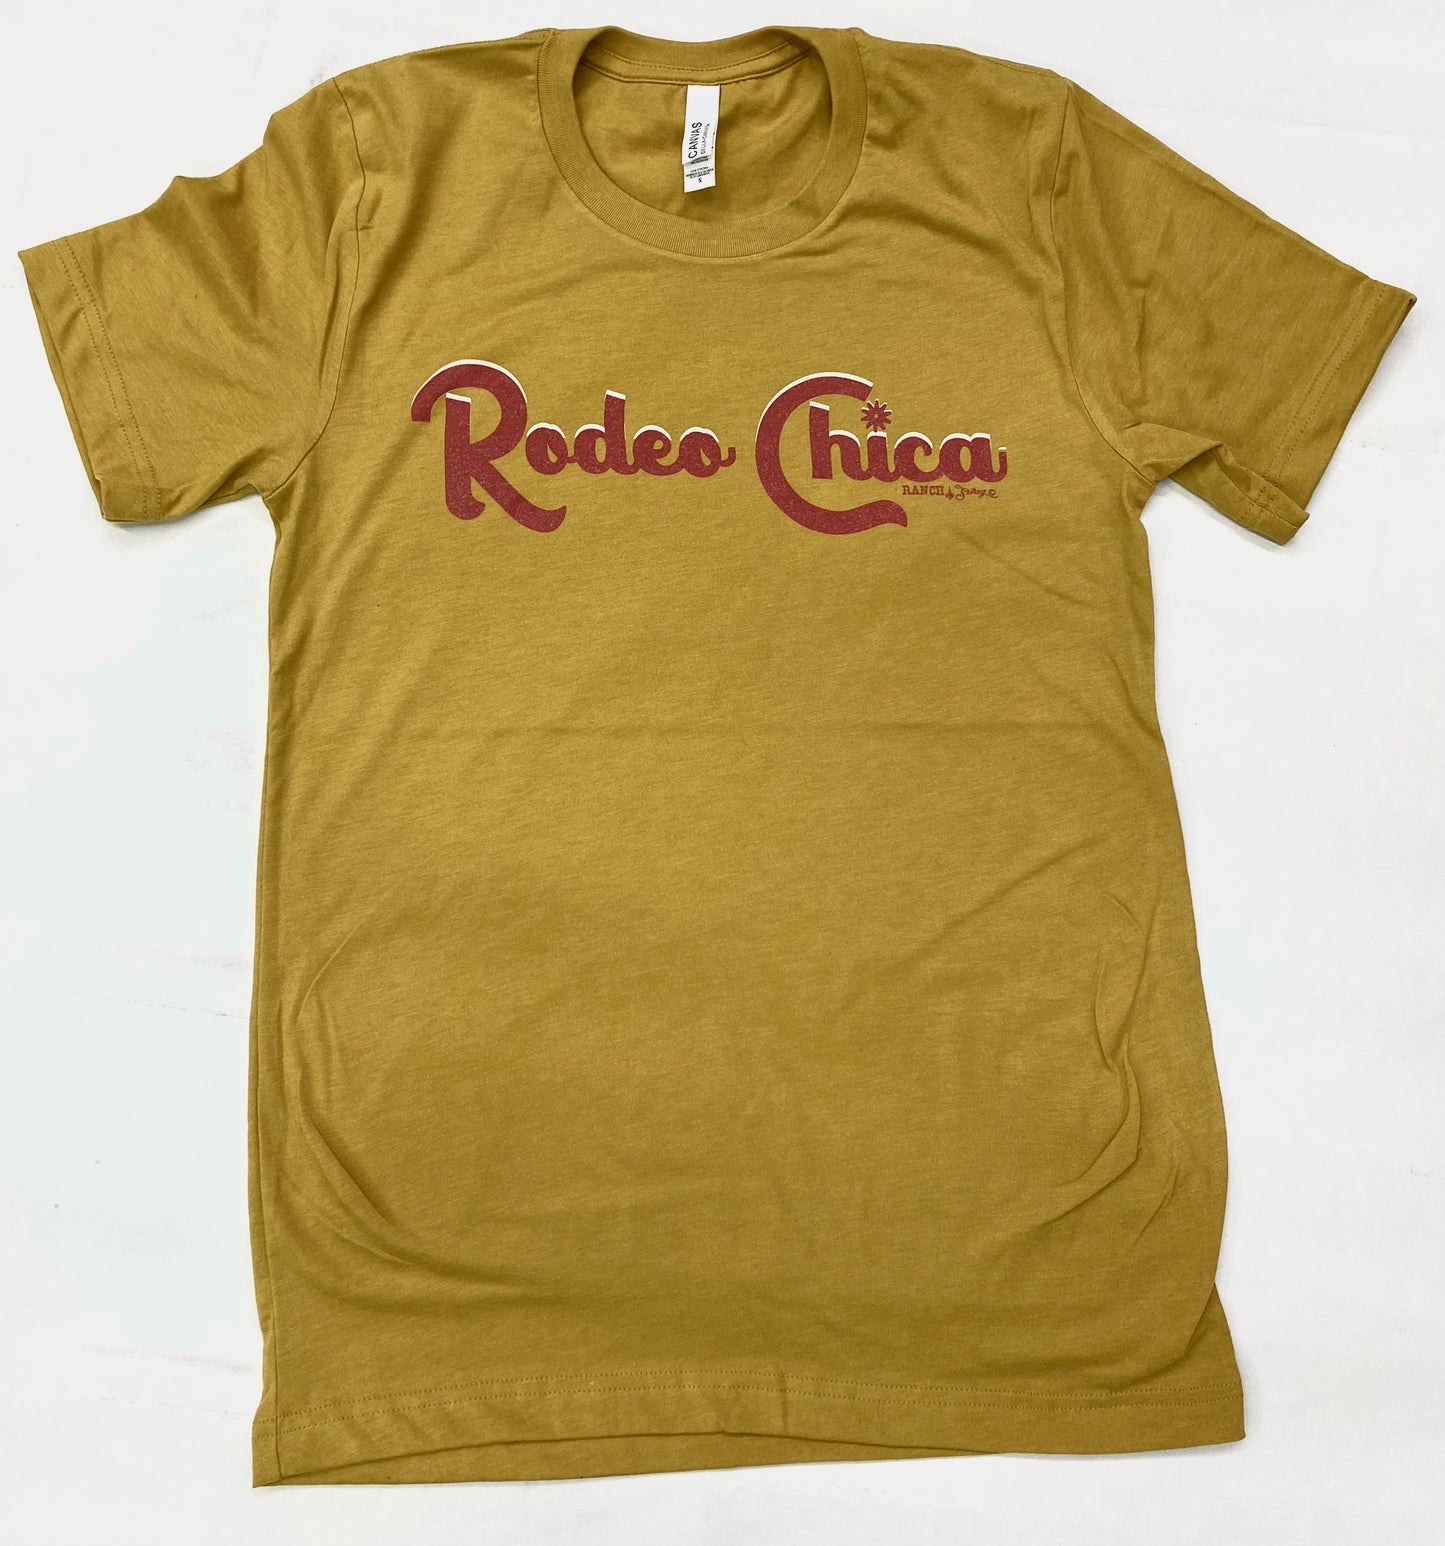 Rodeo Chica Tee Shirt #ROC